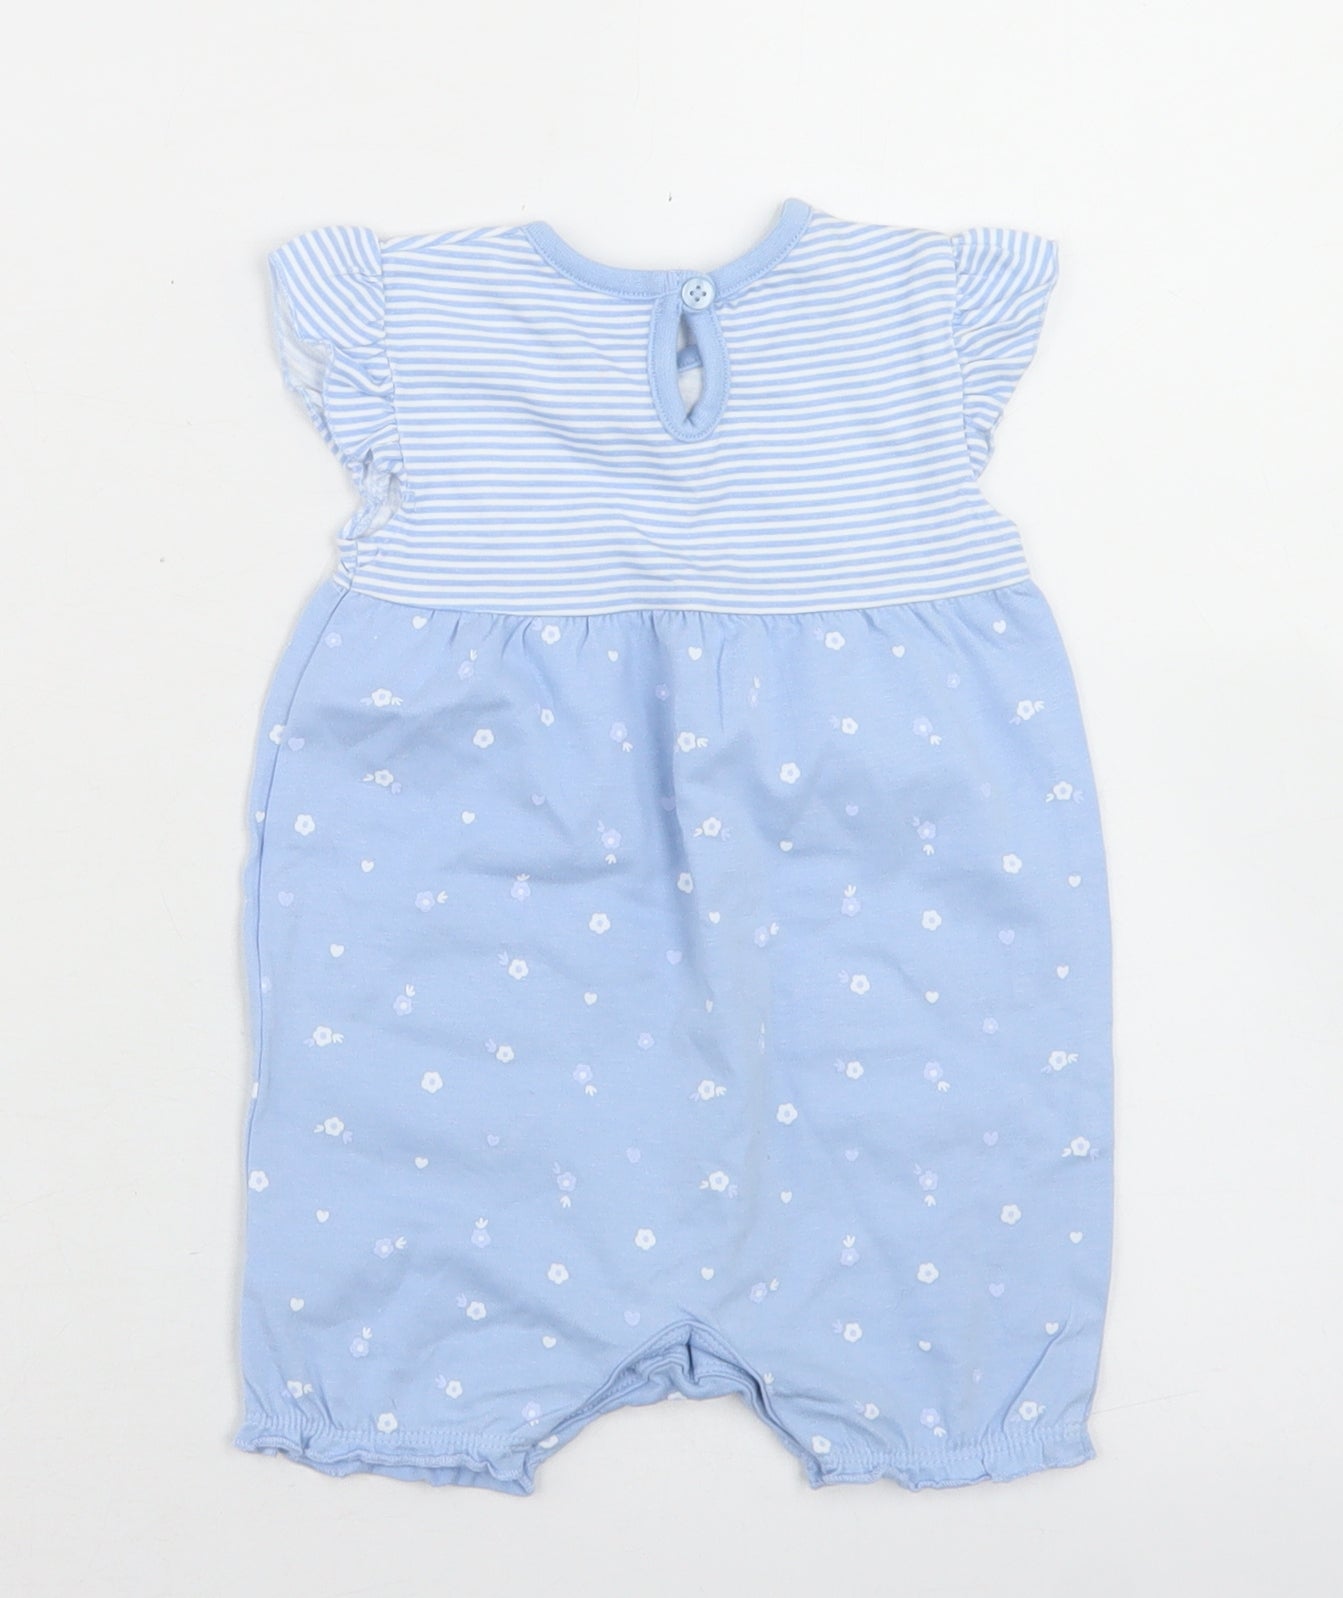 George Girls Blue Striped Cotton Romper One-Piece Size 3-6 Months  Button